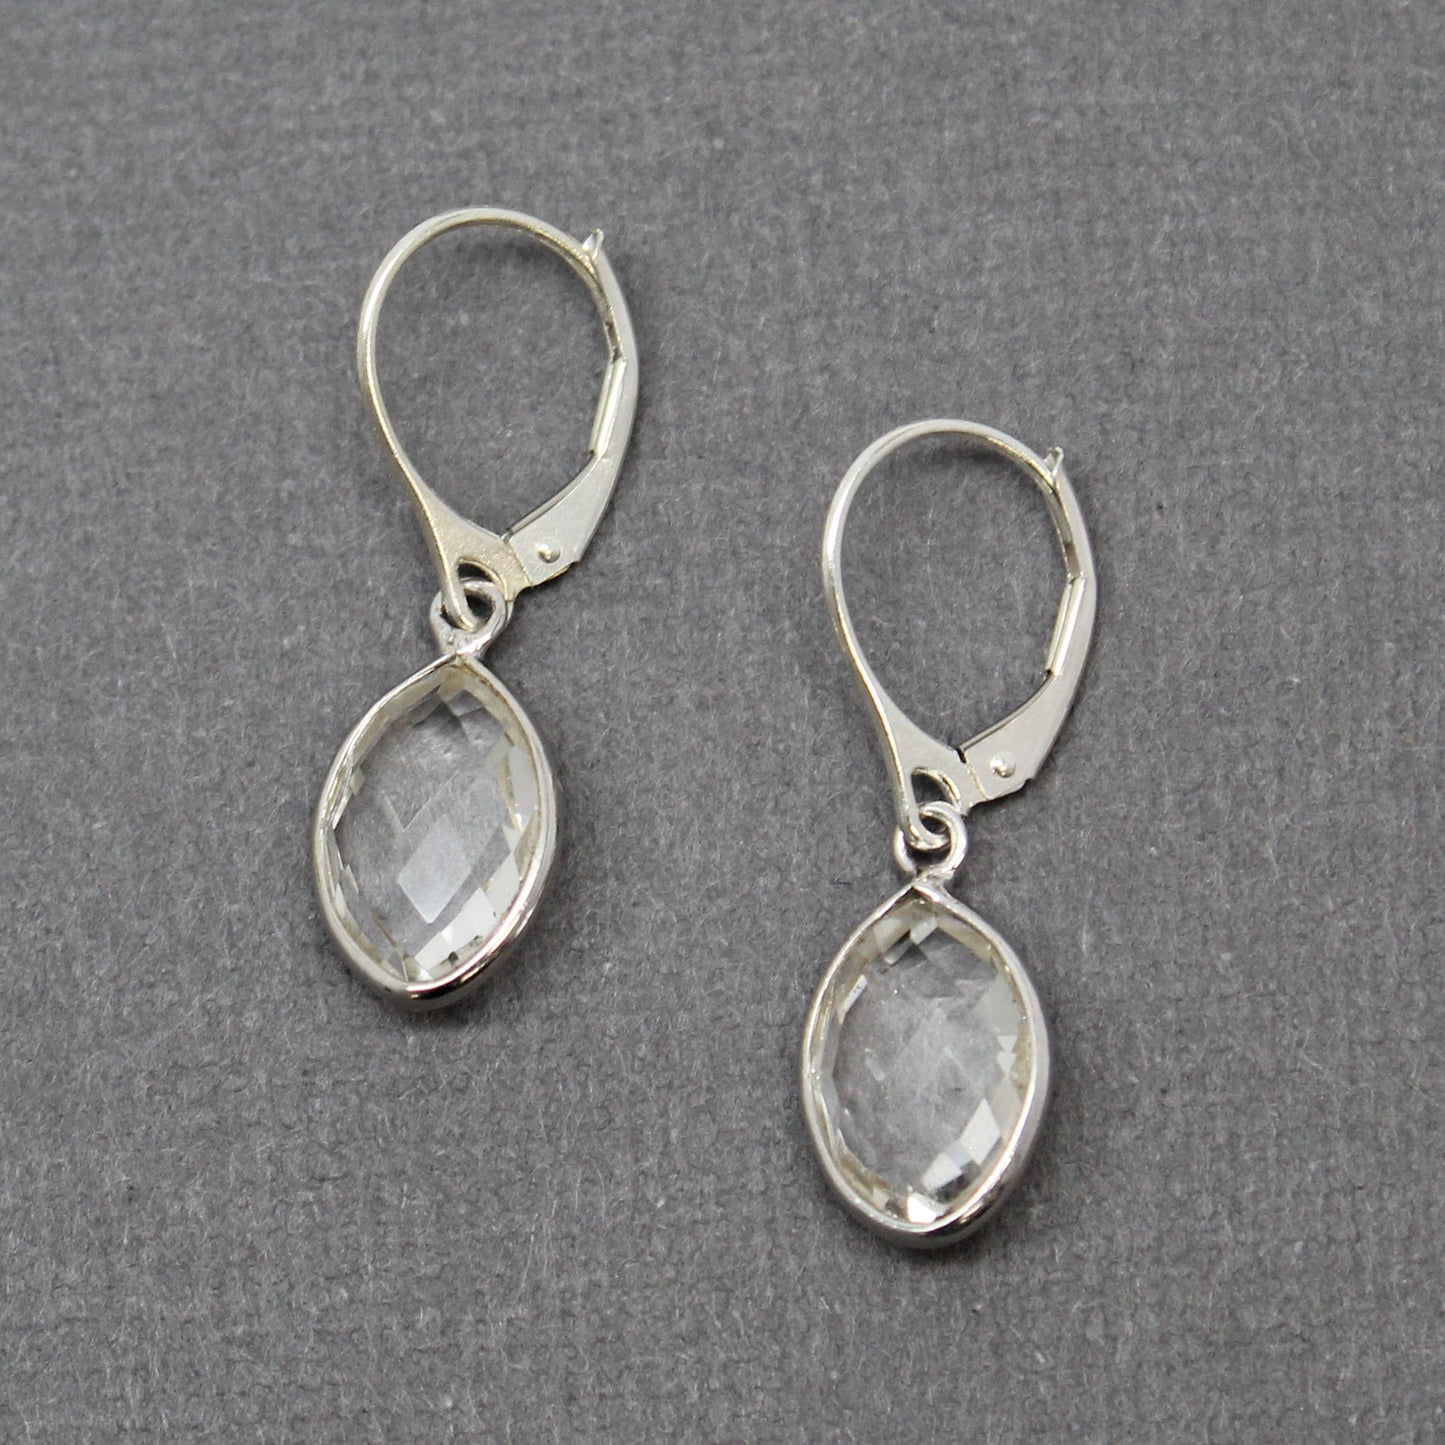 Crystal Quartz Dangle Earrings in Sterling Silver Lever Backs